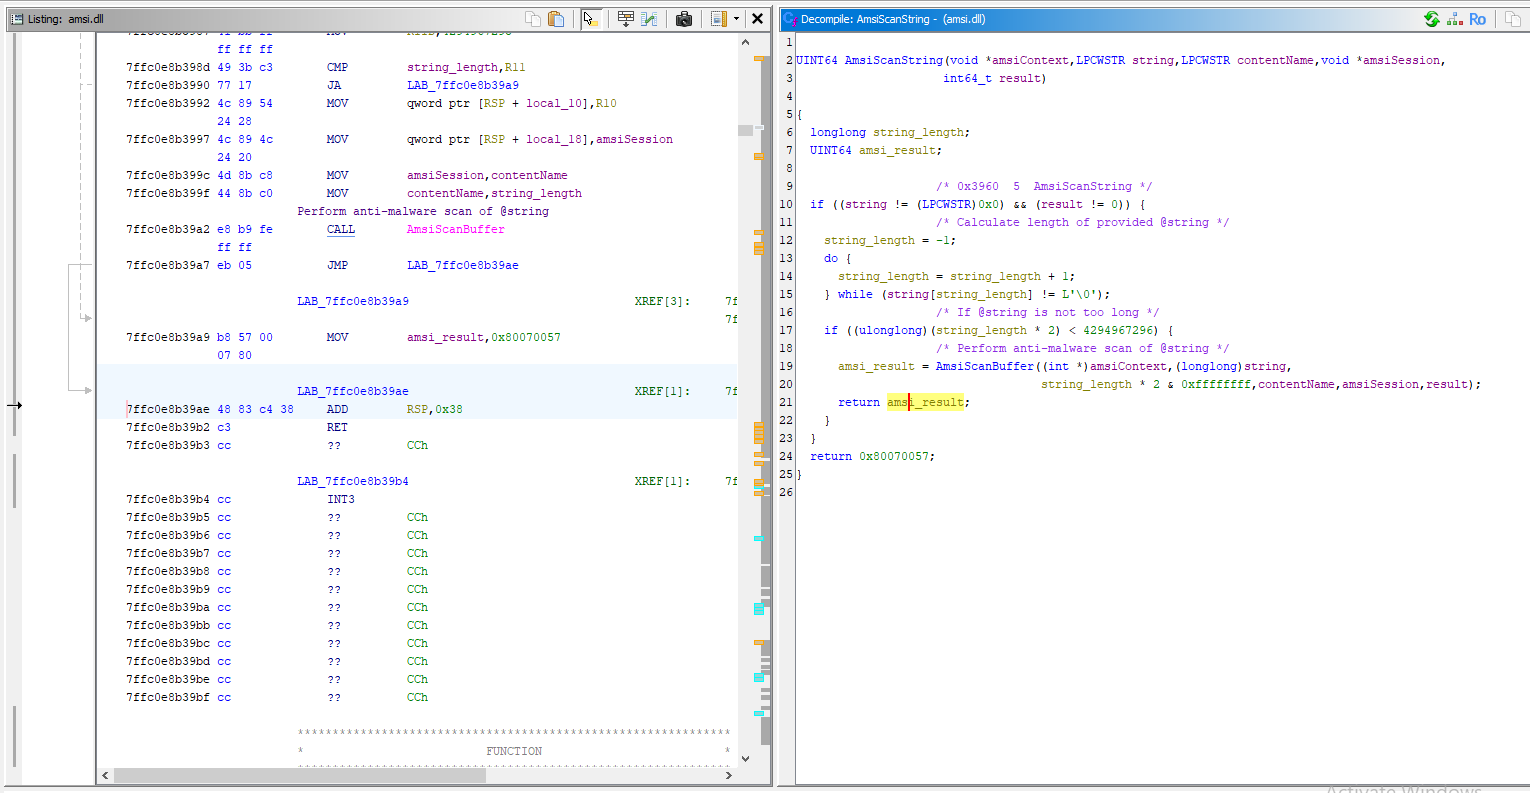 Ghidra Screenshot - AmsiScanString function decompiled